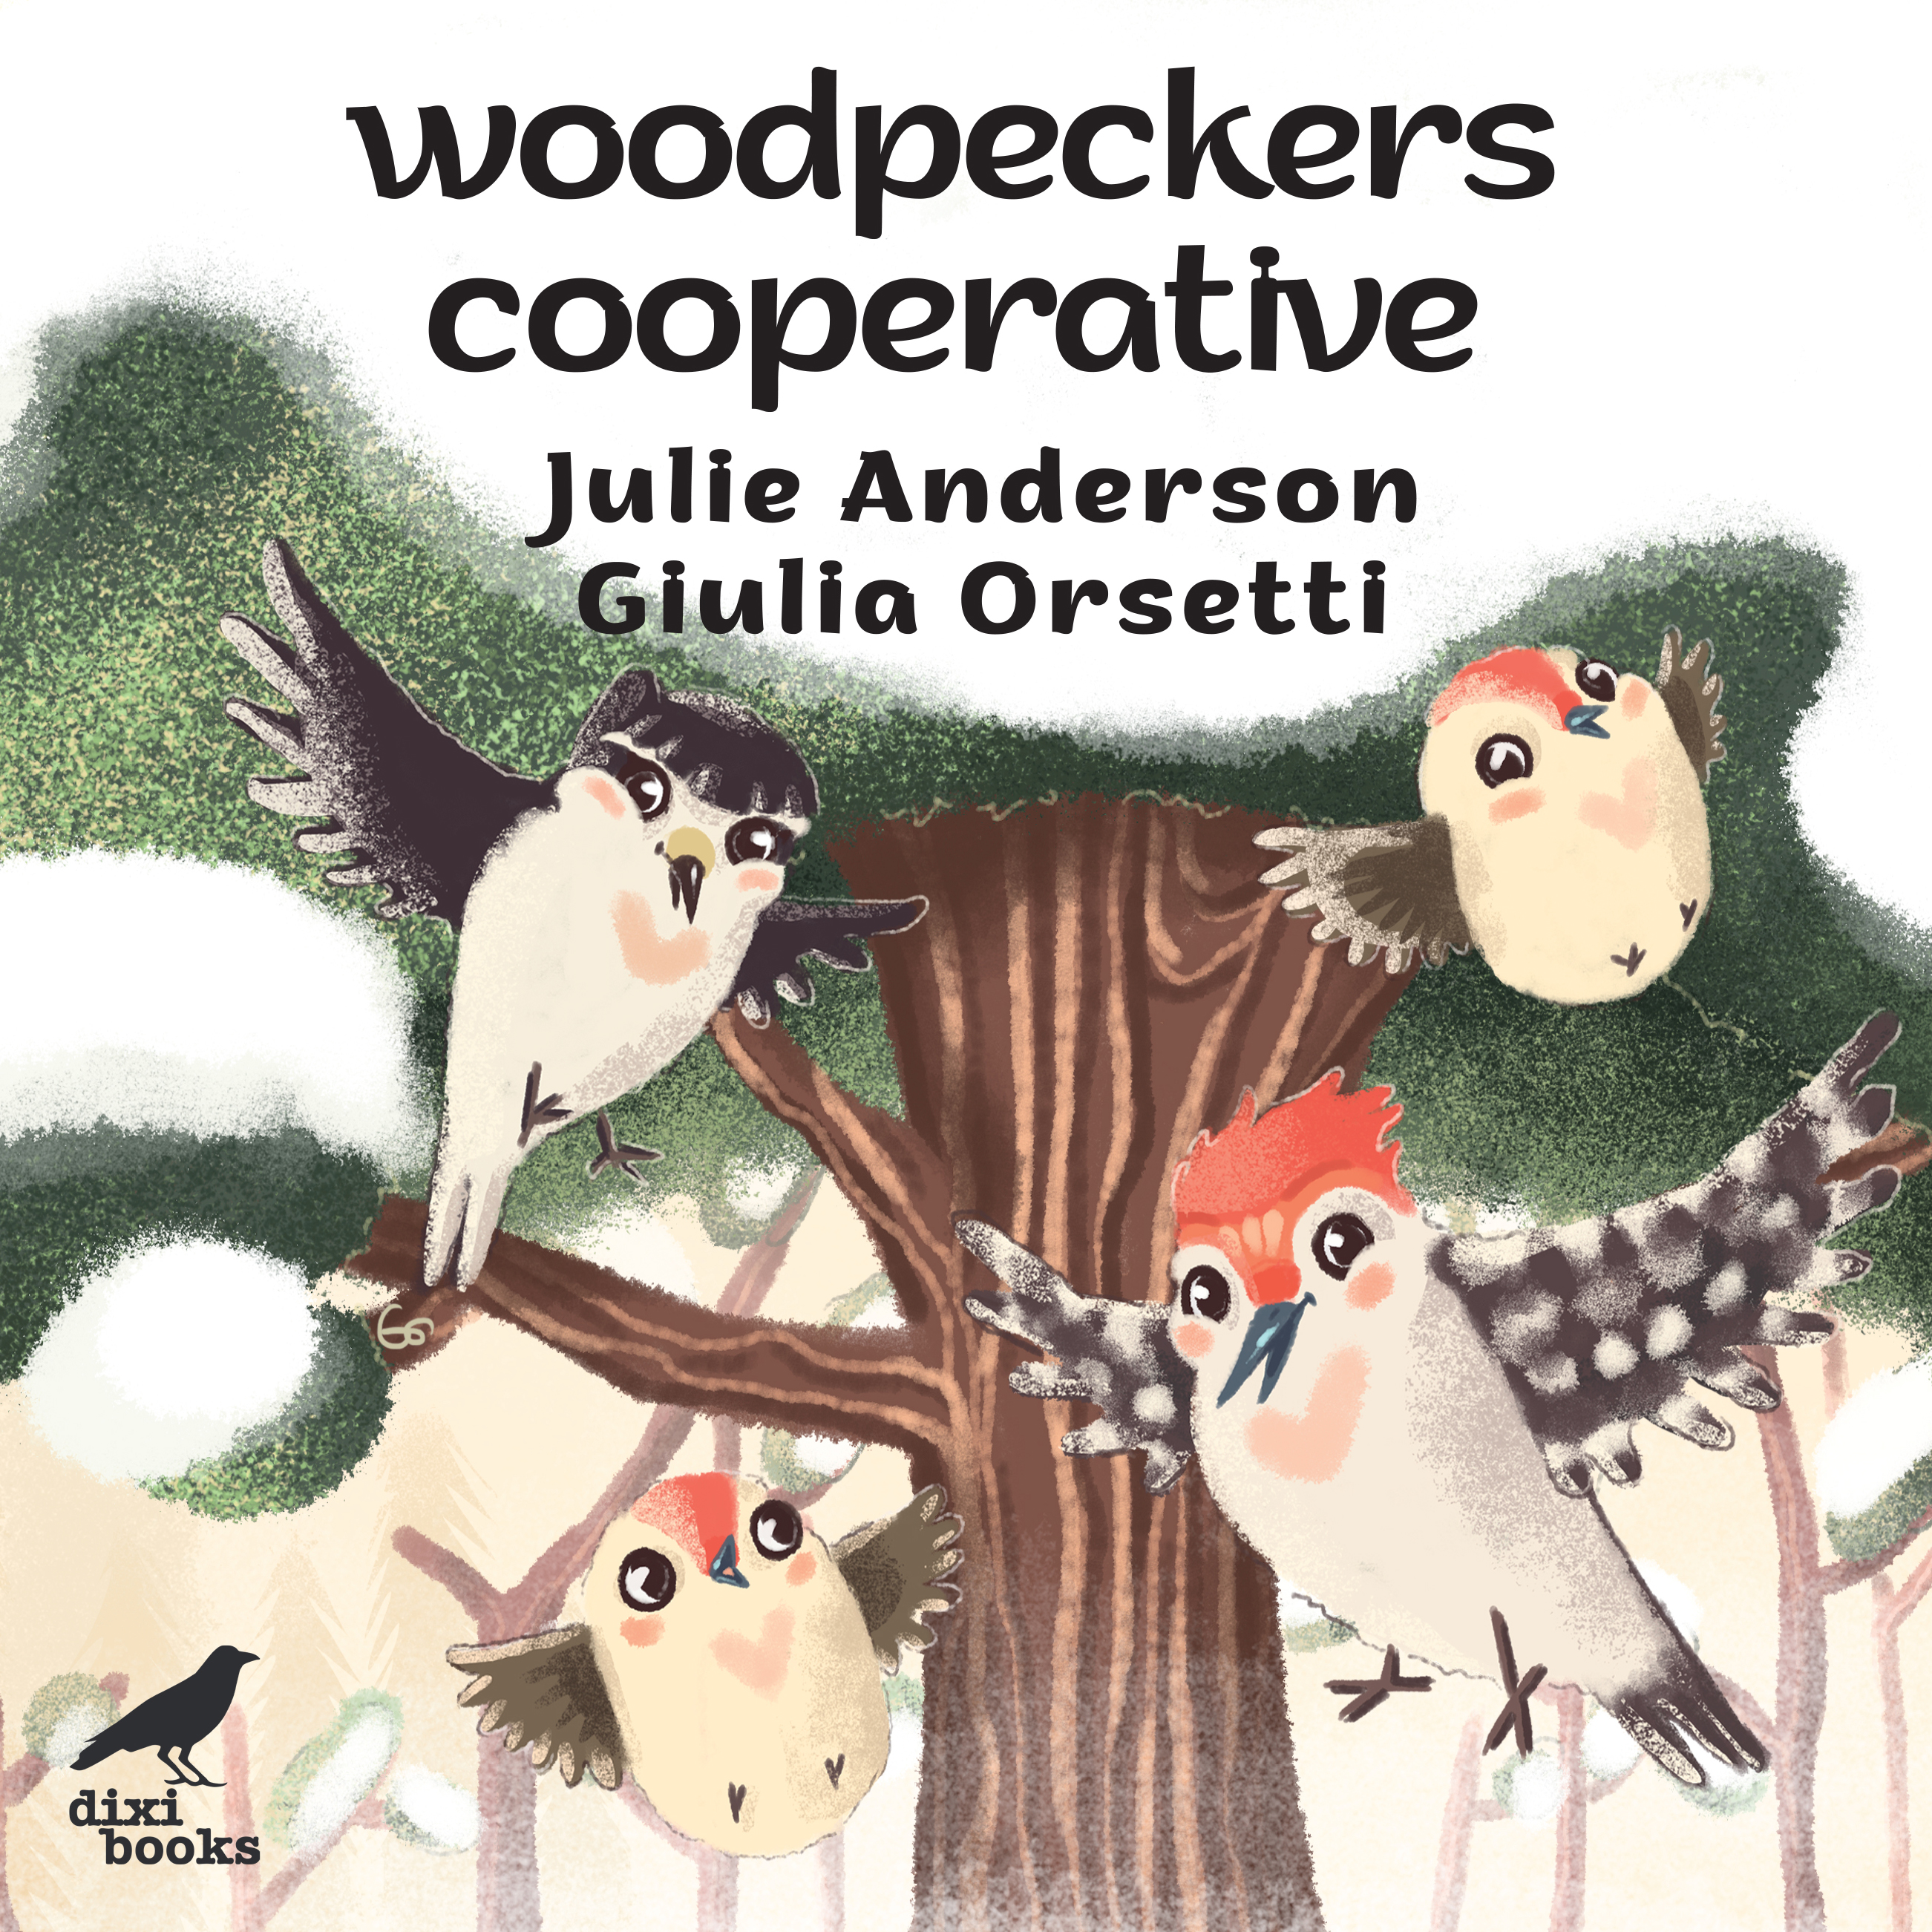 Woodpeckers Cooperative